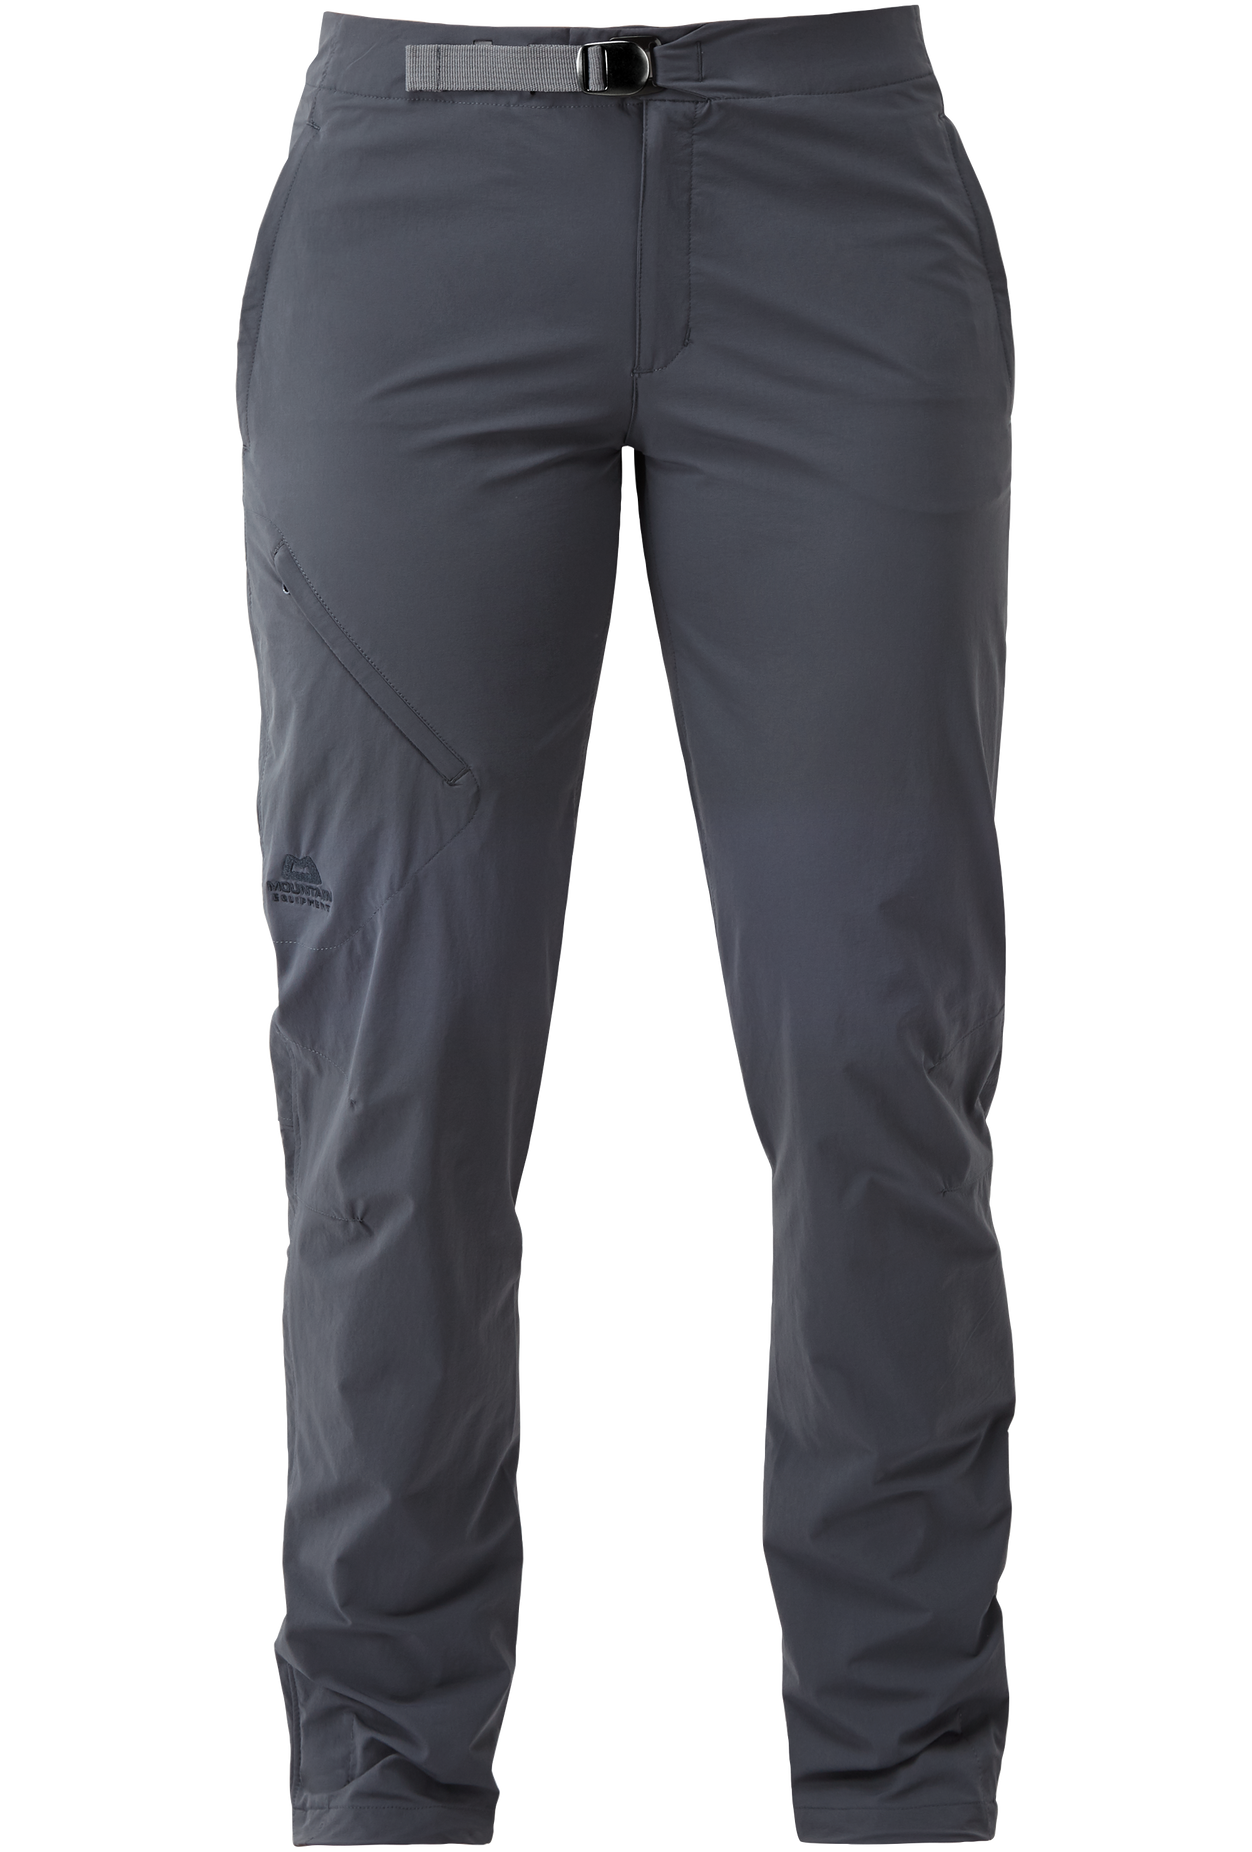 Mountain Equipment dámské softshellové kalhoty Comici Wmns Pant - zkrácené Barva: Ombre Blue, Velikost: 8/XS